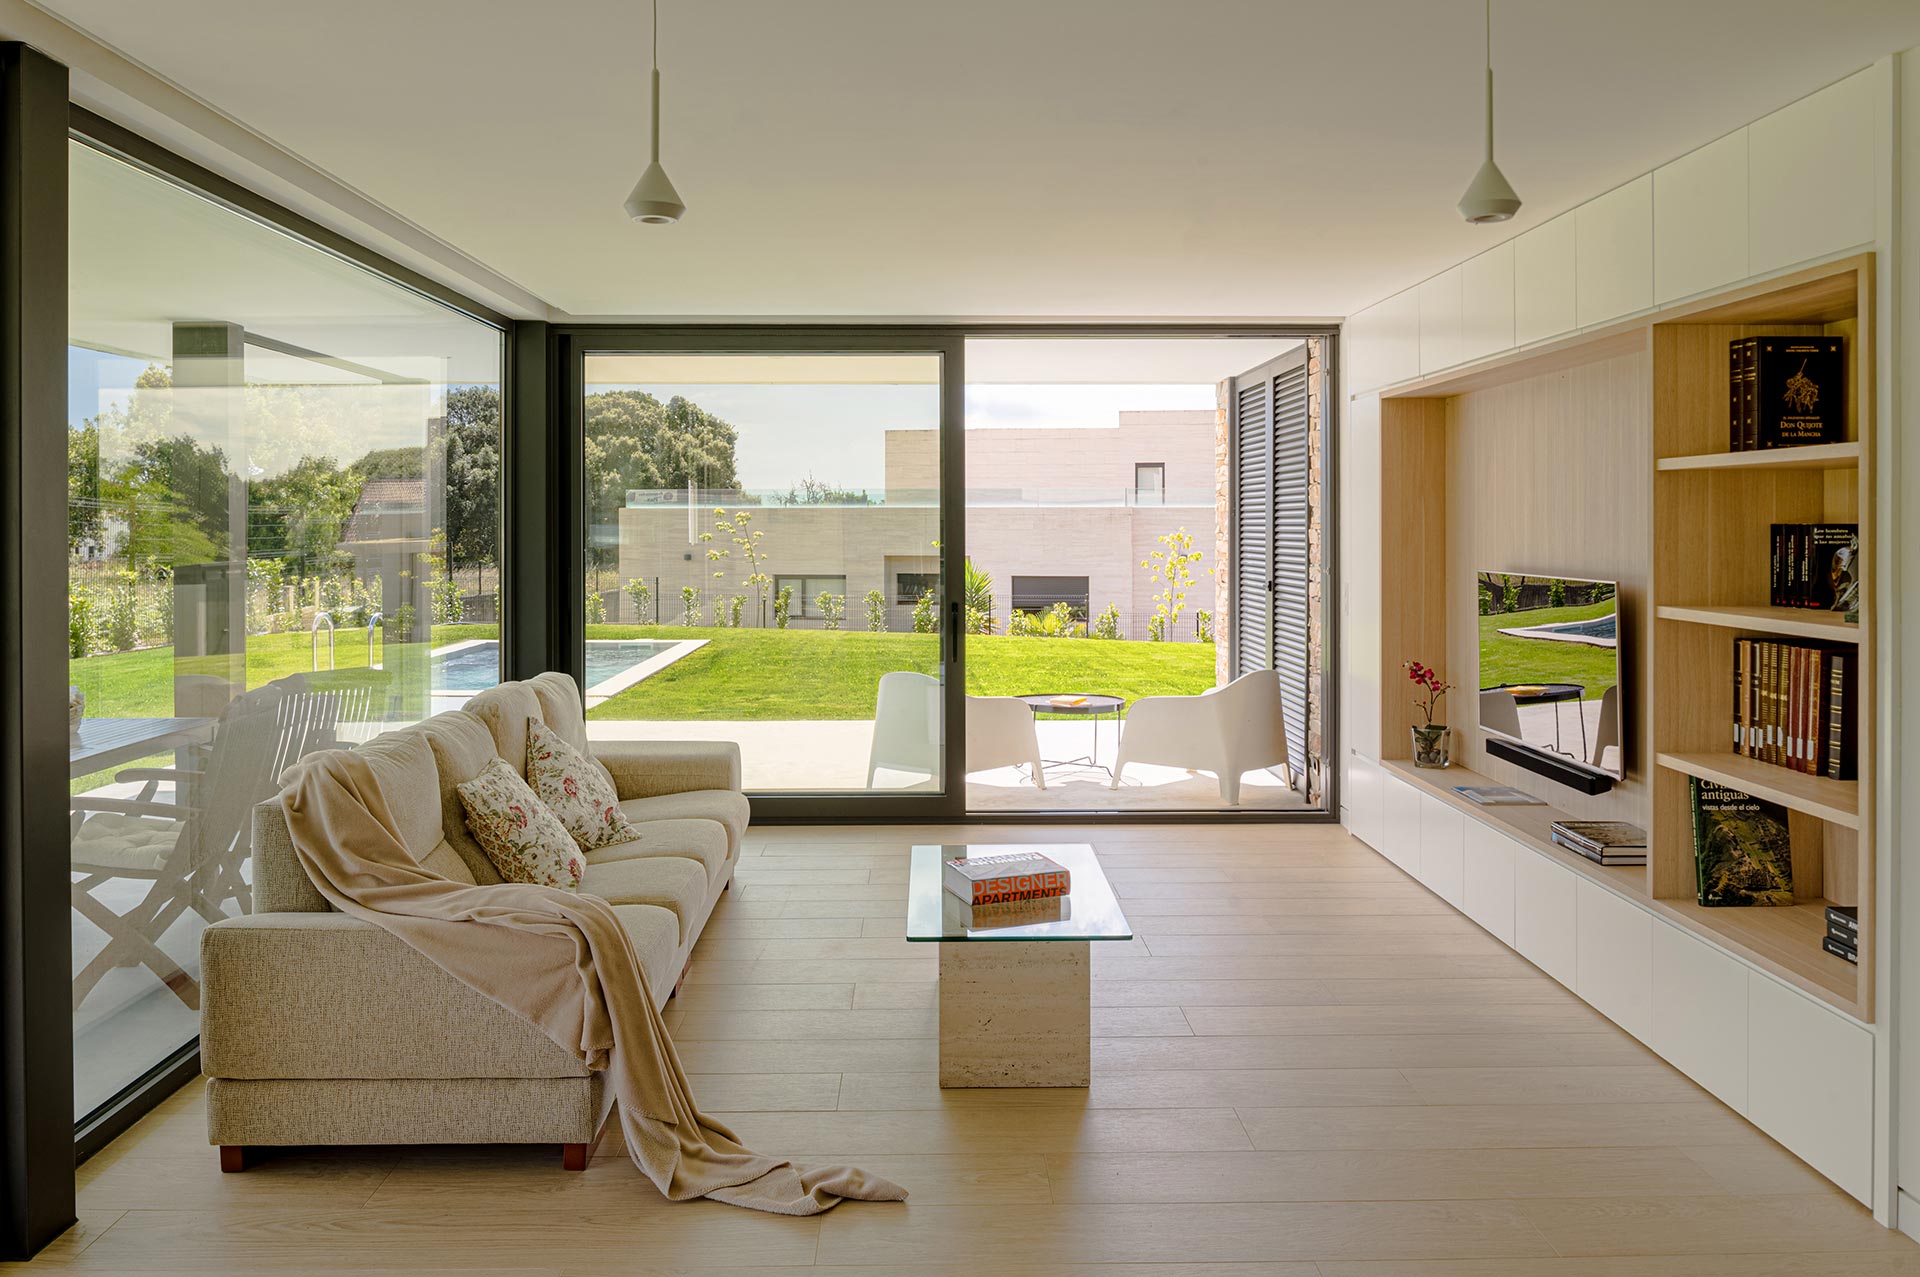 Diseño interior de salón de casa moderna con grandes ventanales diseñada por Moah Arquitectos en Somo. Cantabria